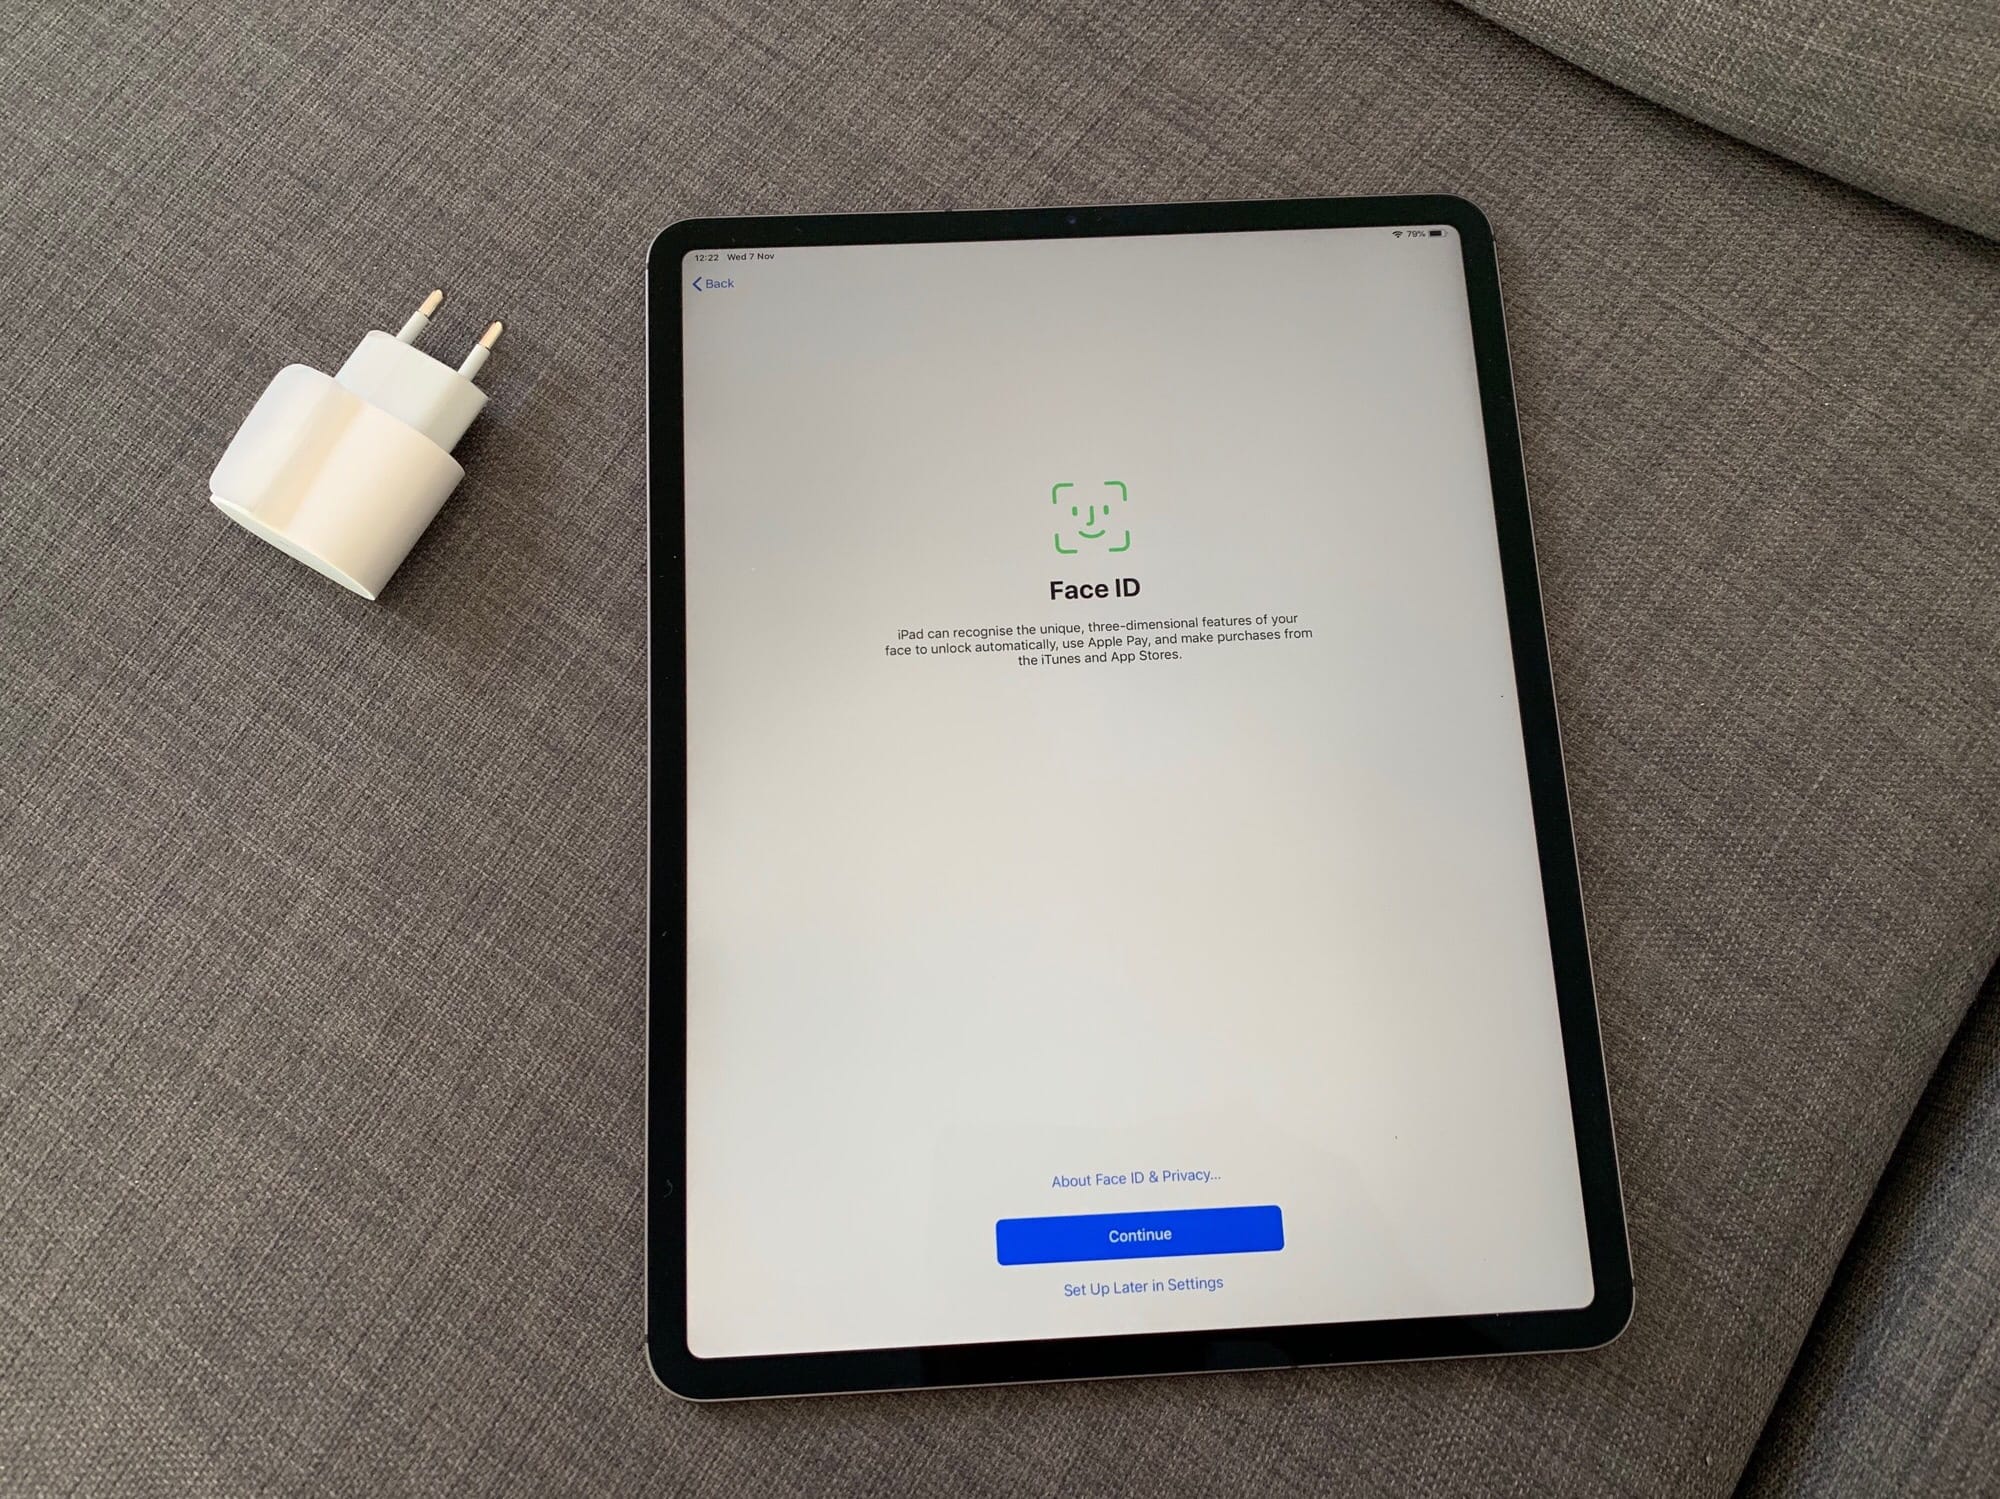 pola osam borba javnost  How to set up your new iPad Pro 2018 the right way | Cult of Mac